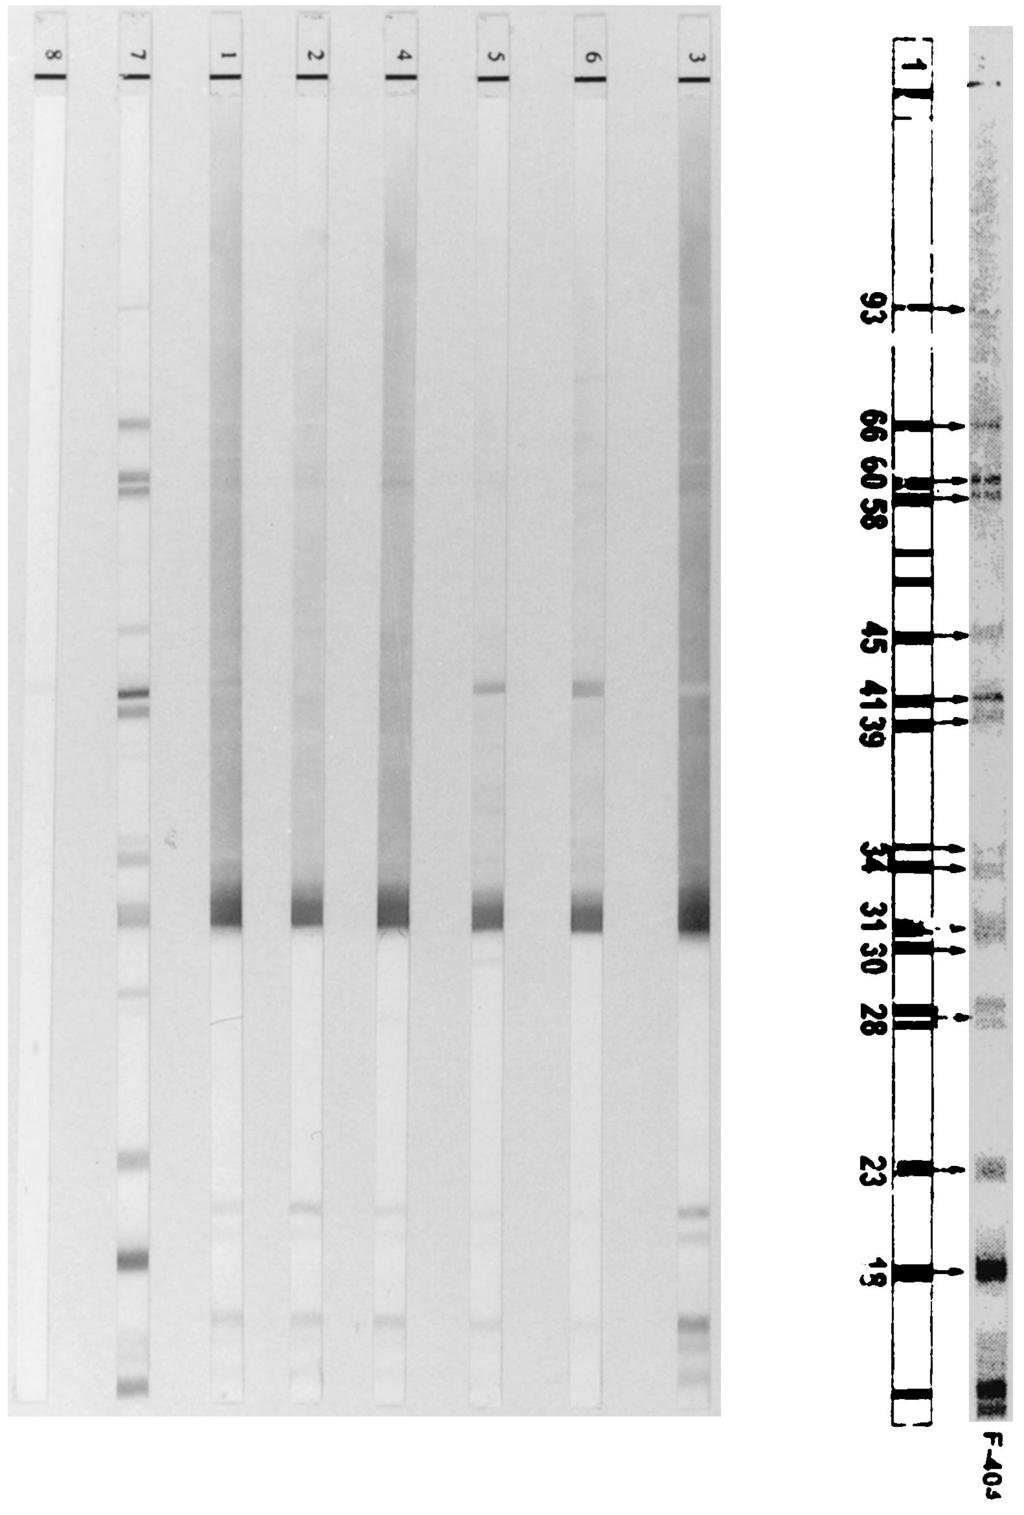 Results of MarDx WB with vaccine recipient serum for IgG antibodies to B. burgdorferi.